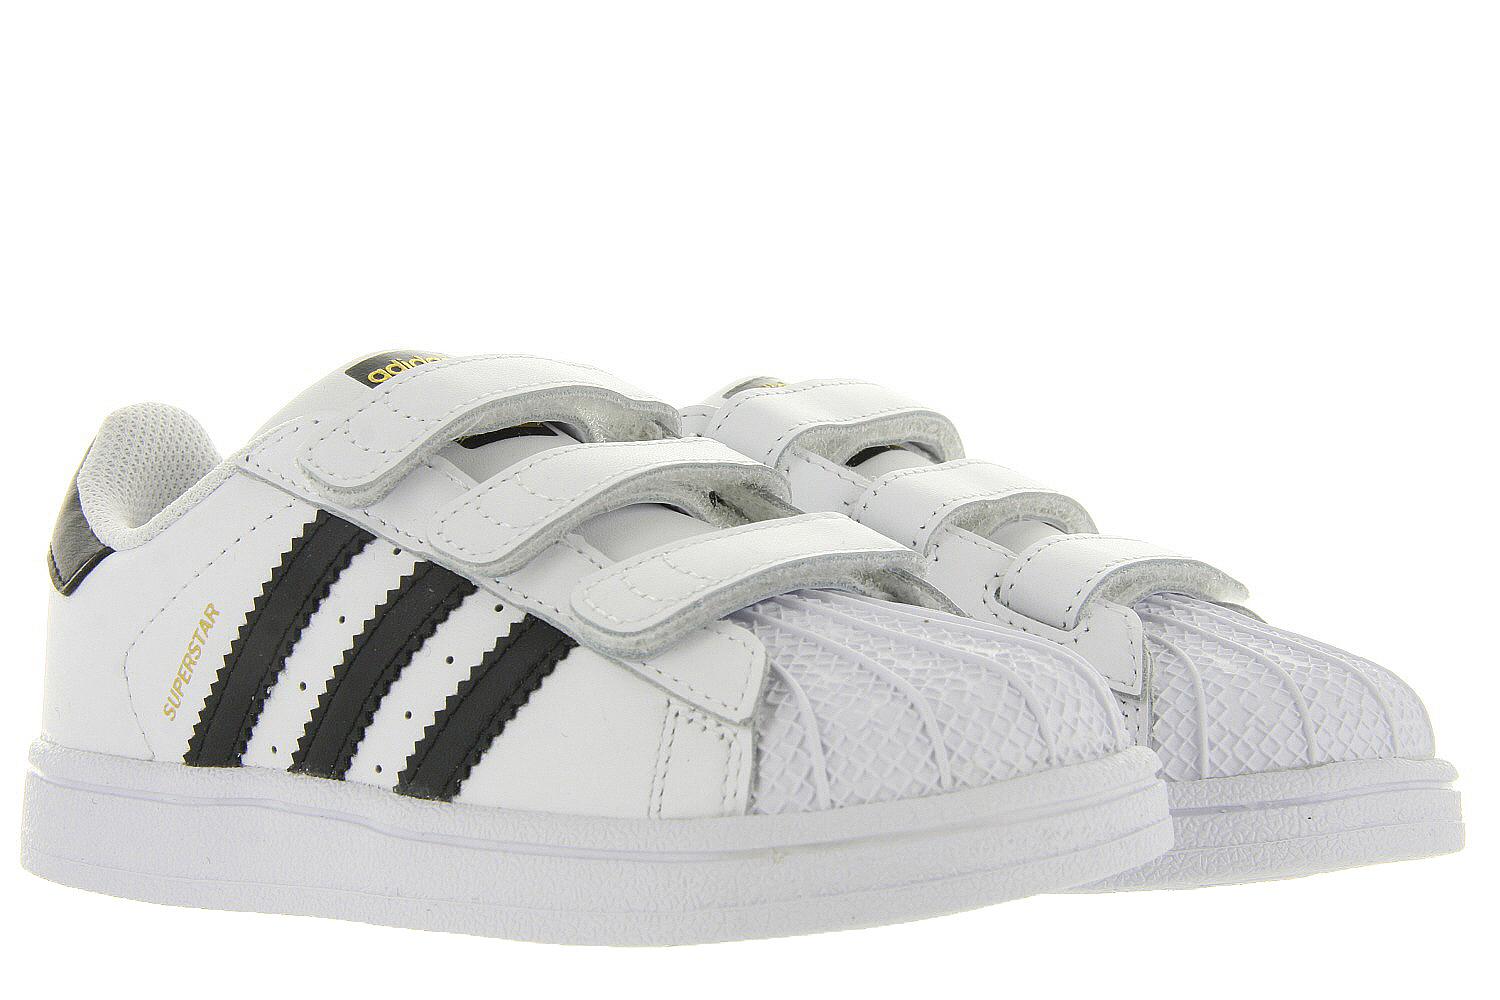 Buy > adidas witte sneakers dames sale > in stock